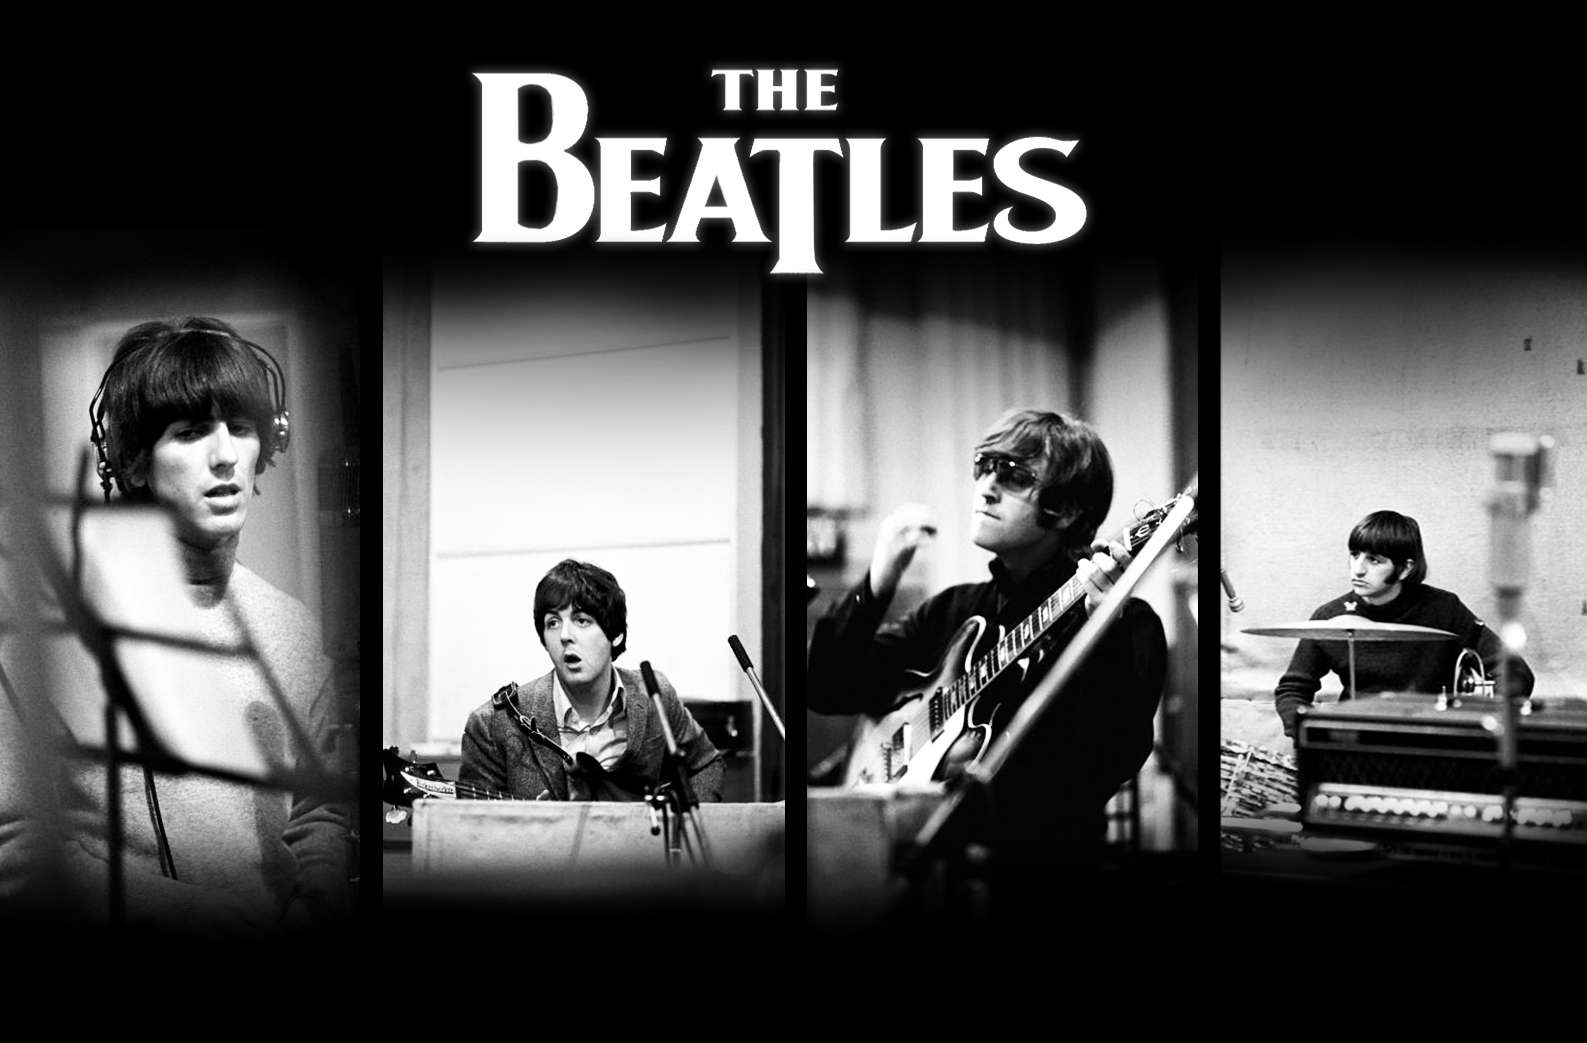 People 1587x1043 The Beatles John Lennon Paul McCartney Ringo Starr George Harrison musician rock bands electric guitar men